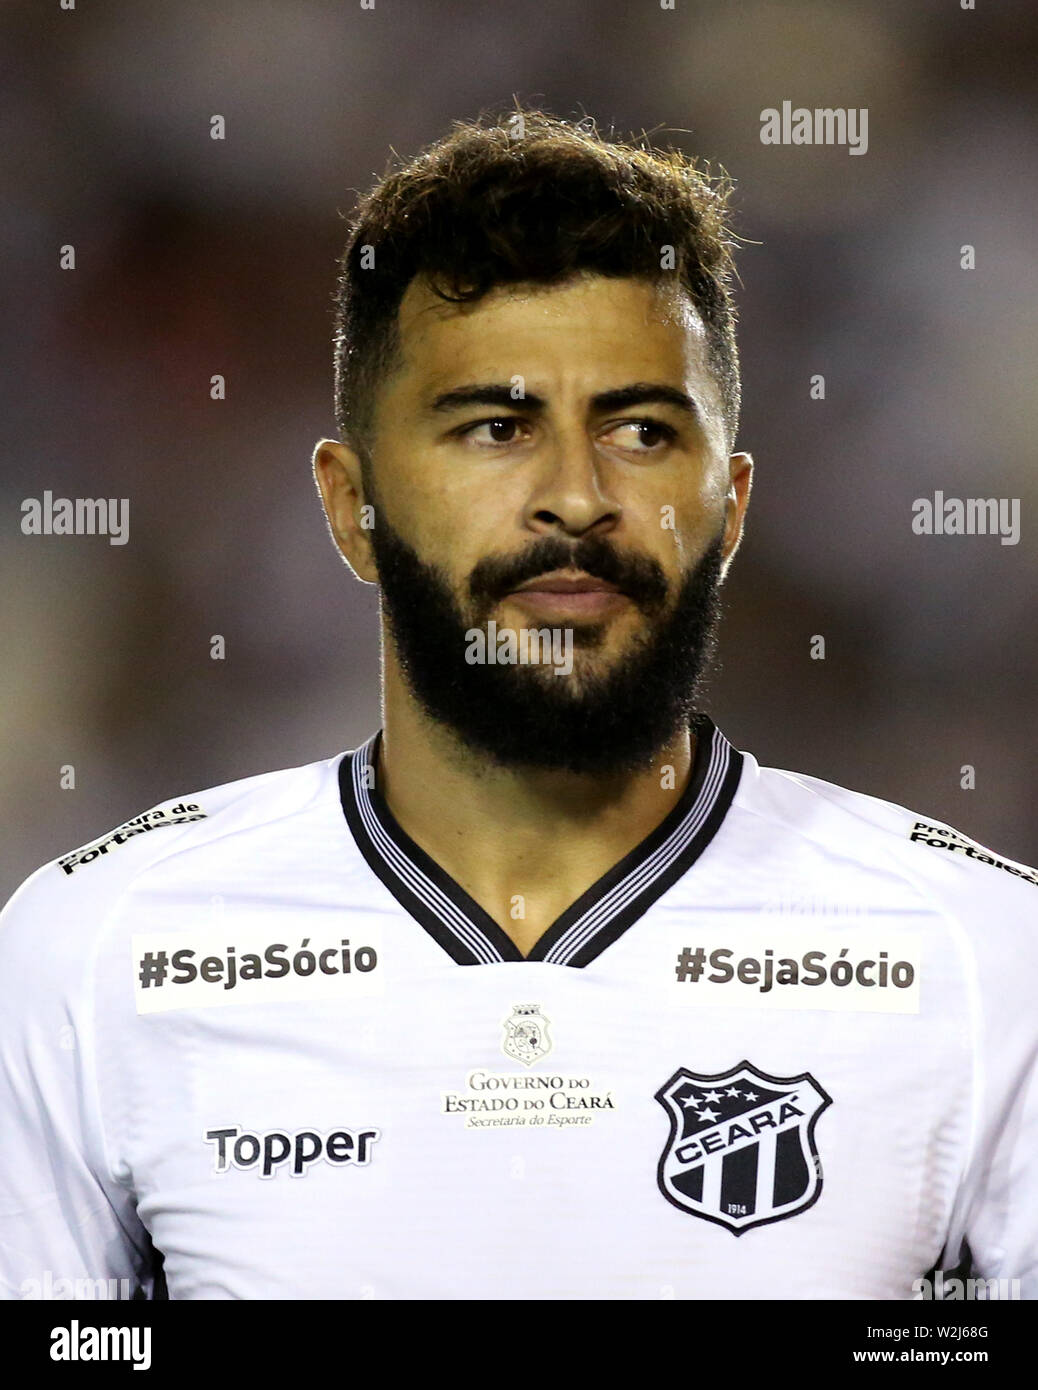 Lucas Cardoso :: Player Profile 